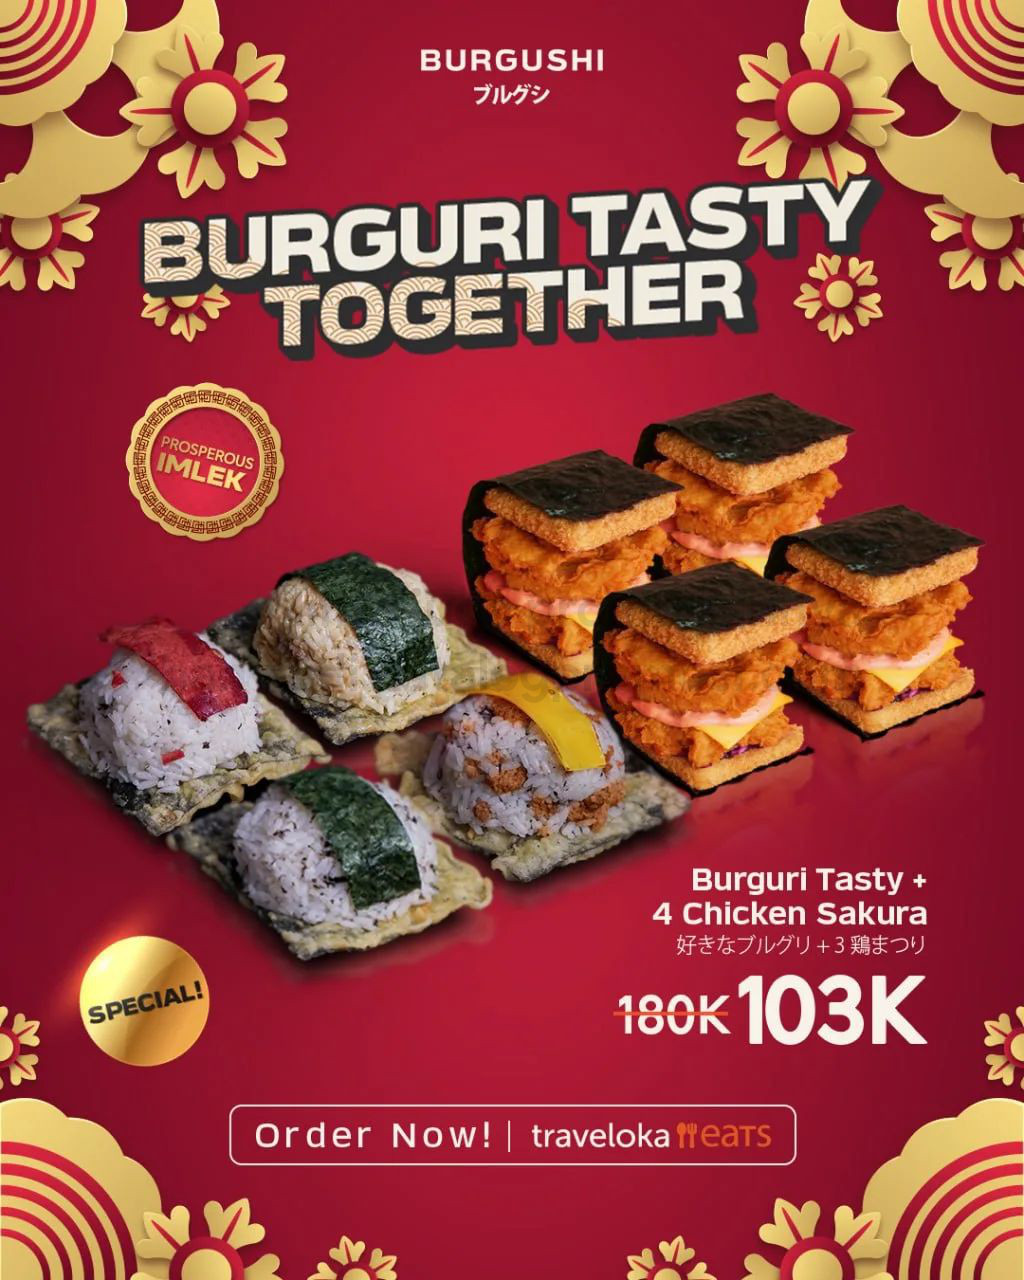 BURGUSHI Promo Paket 4 Burguri Tasty dan 4 Chicken Sakura cuma Rp. 103.000 khusus pemesanan via TRAVELOKA EATS